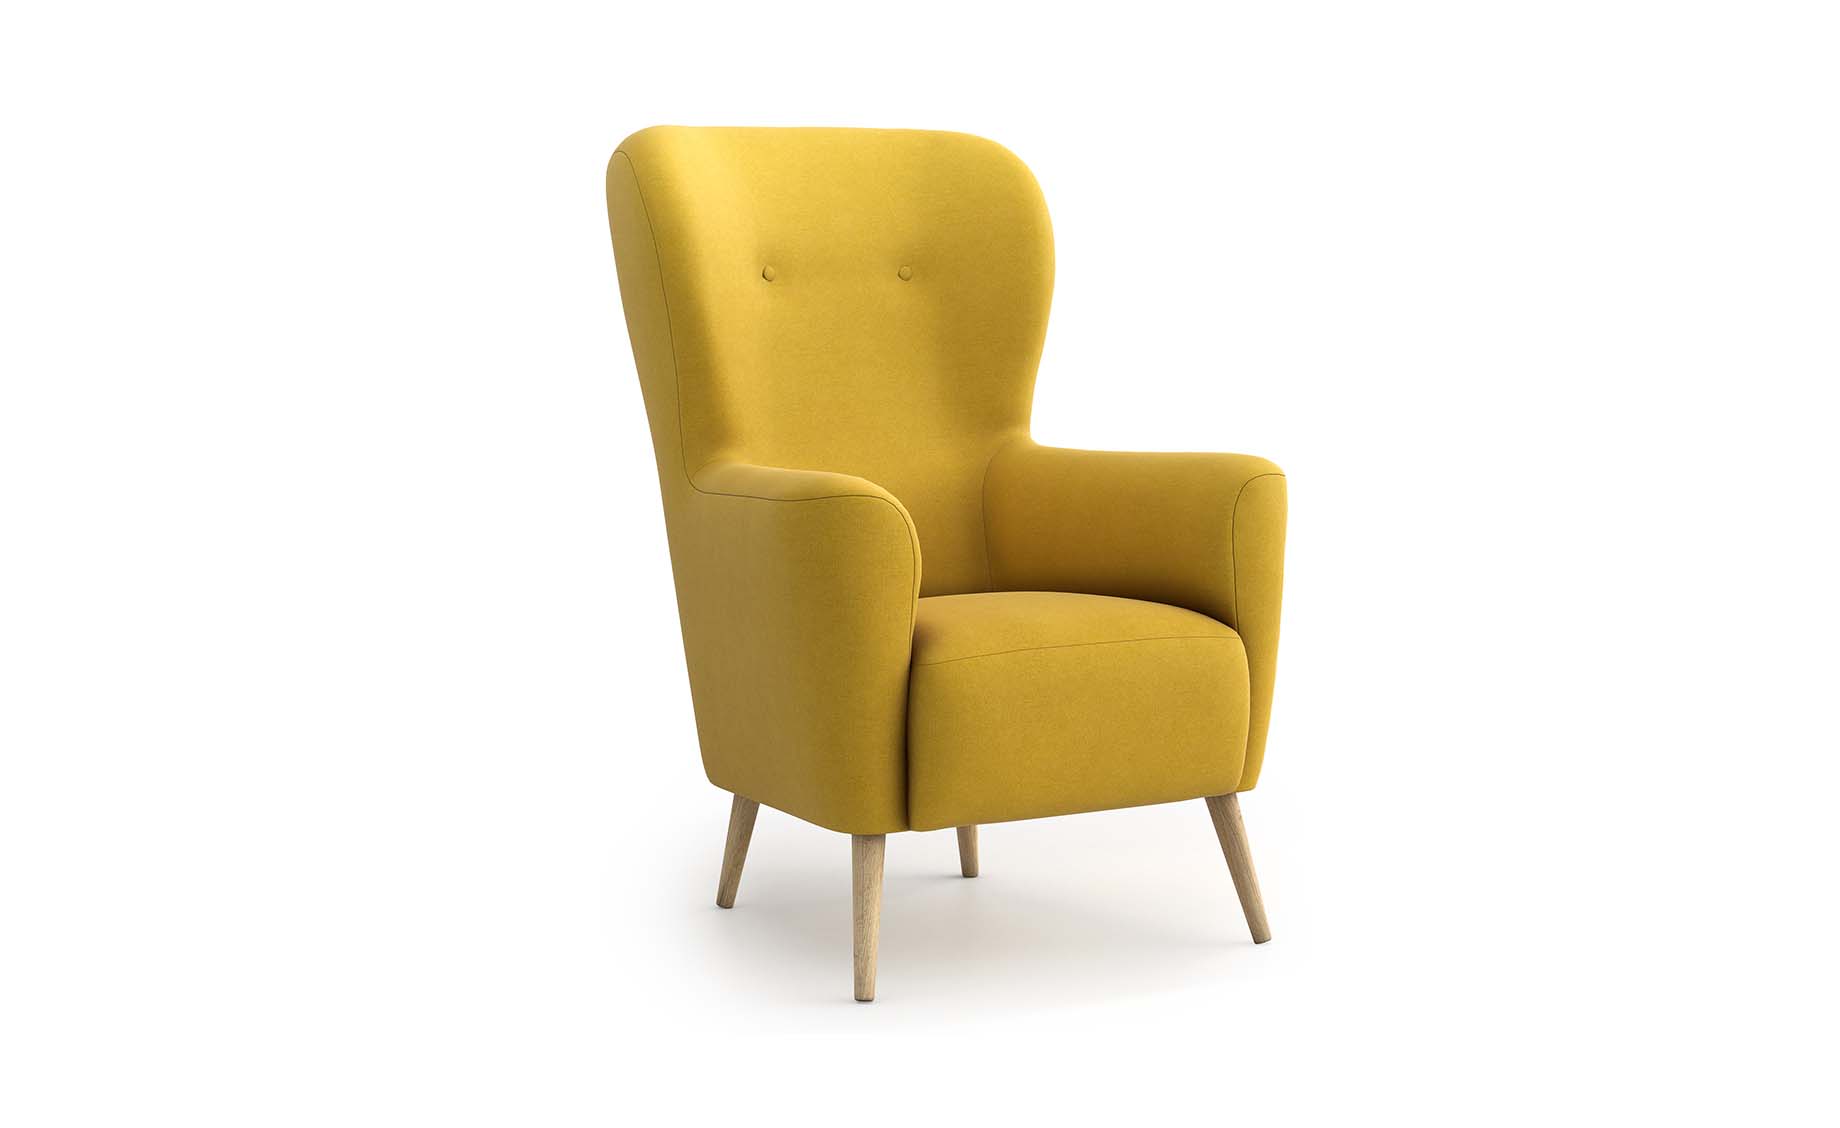 Ahne fotelja žuta 81x97x108 cm